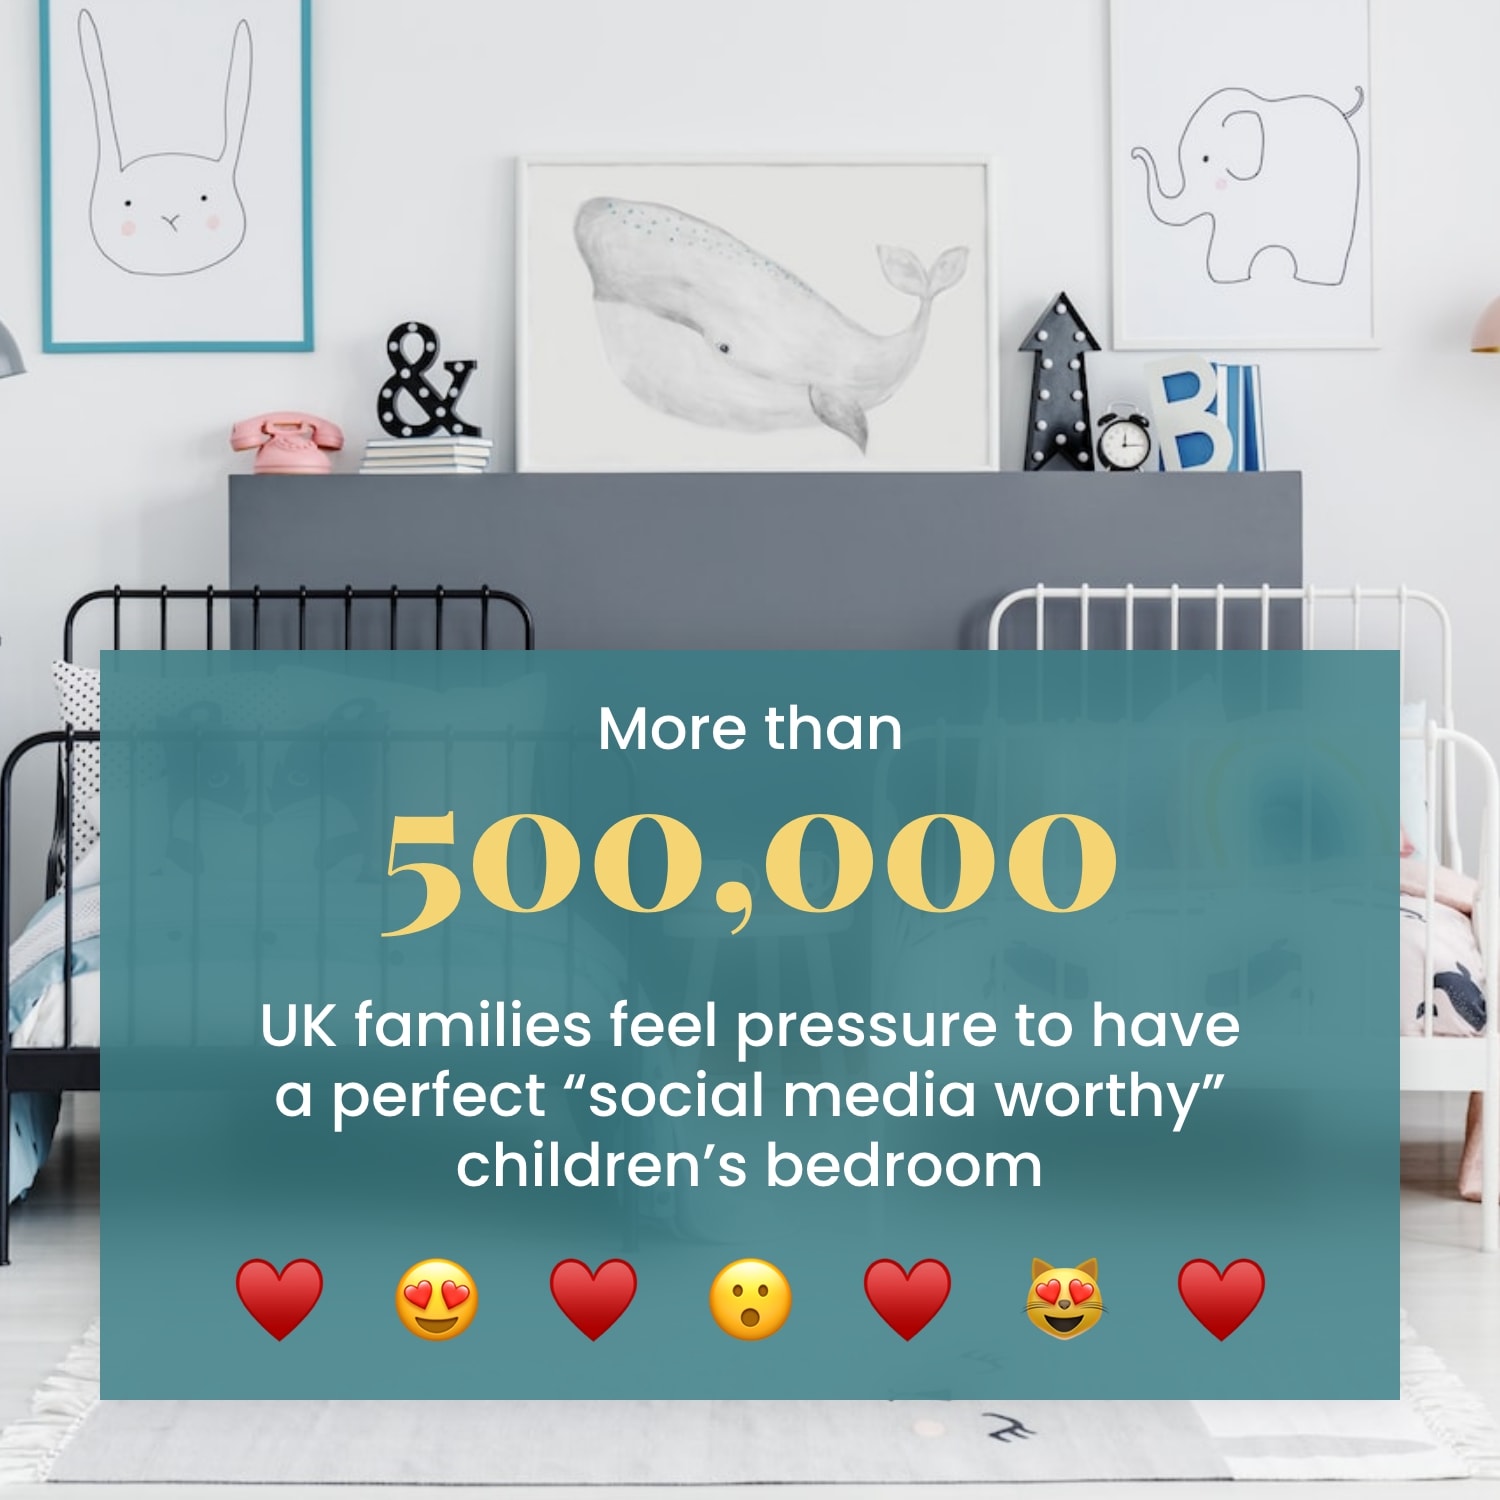 Half a million UK families feel pressure